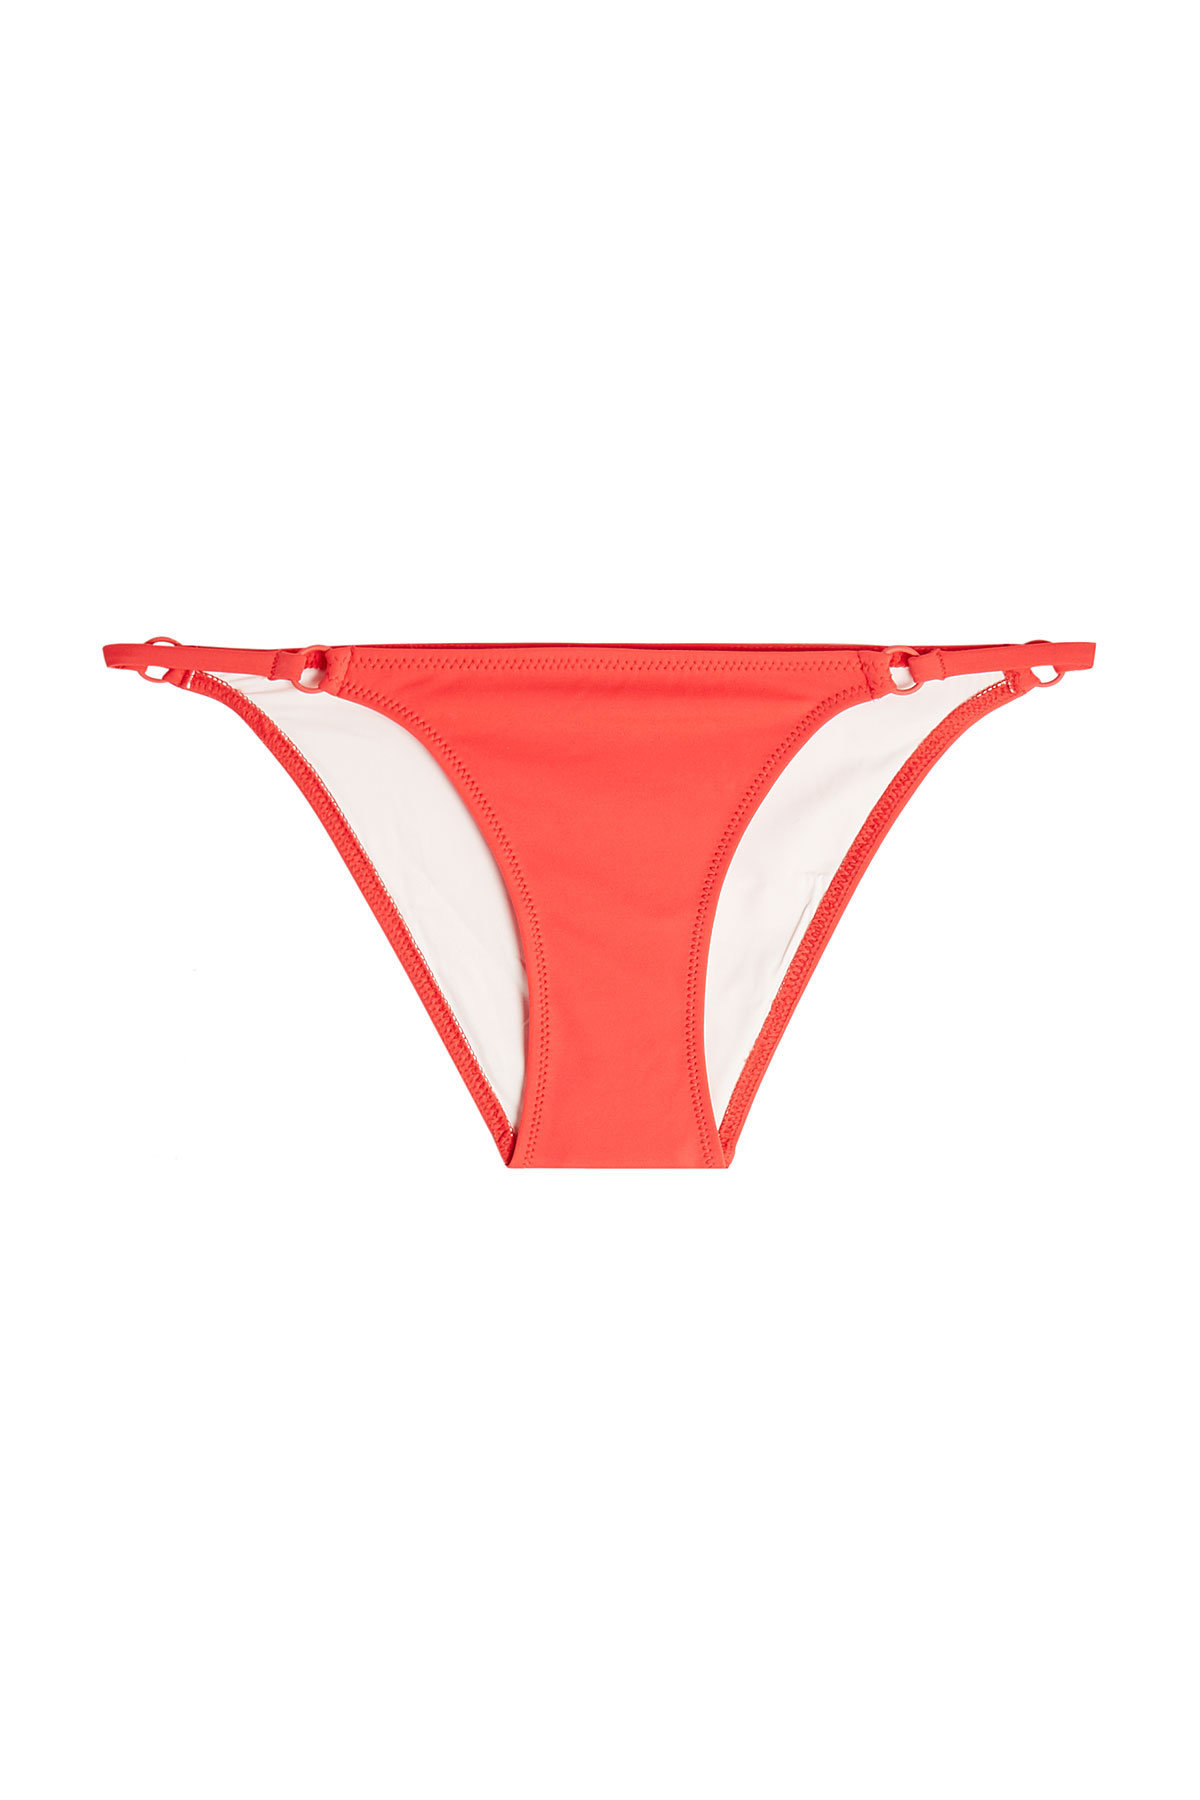 Solid & Striped - The Tilda Bikini Bottoms